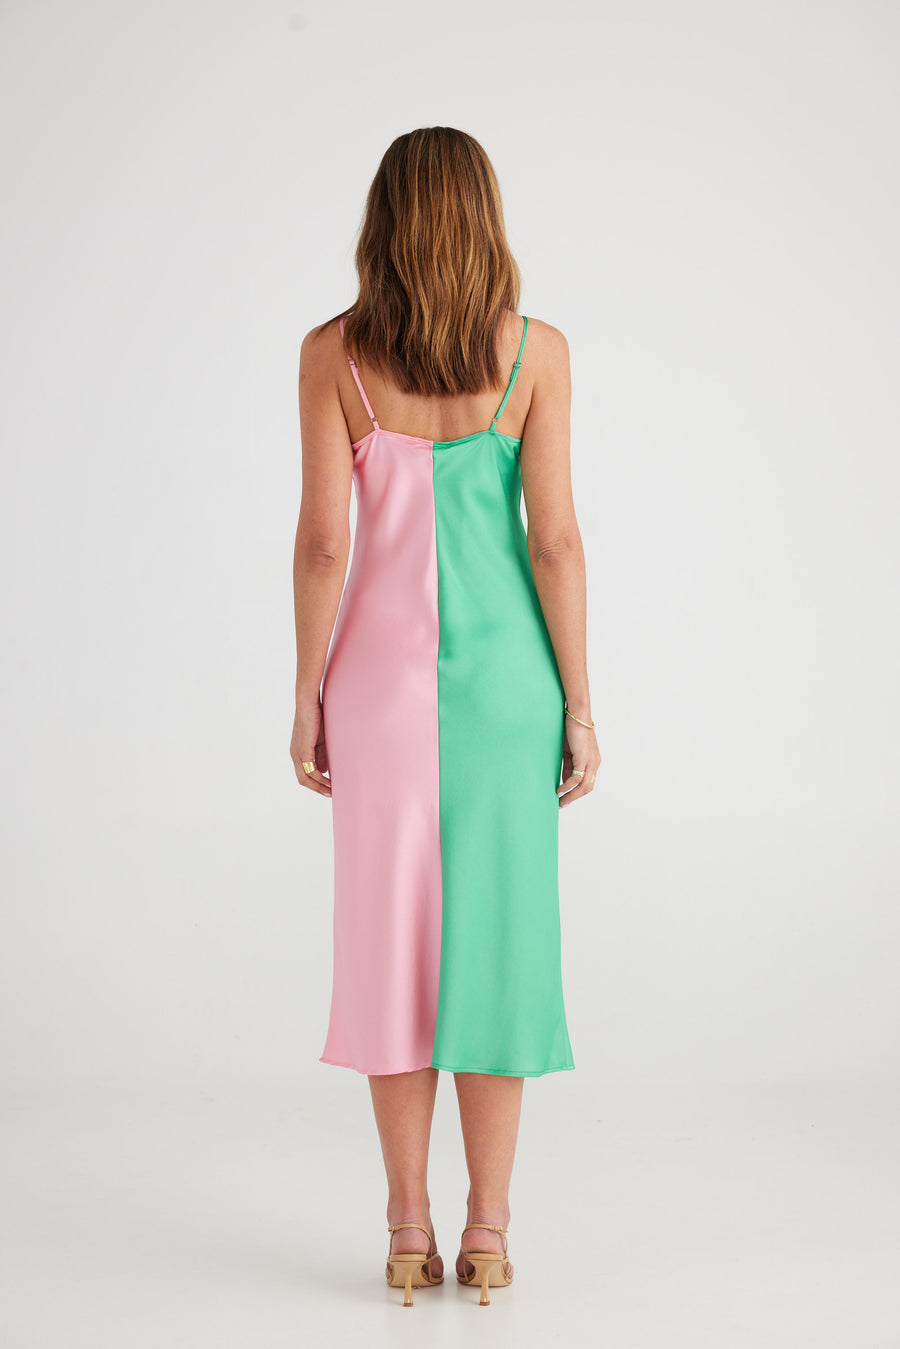 Lexi Two-Tone Dress - Green + Pink